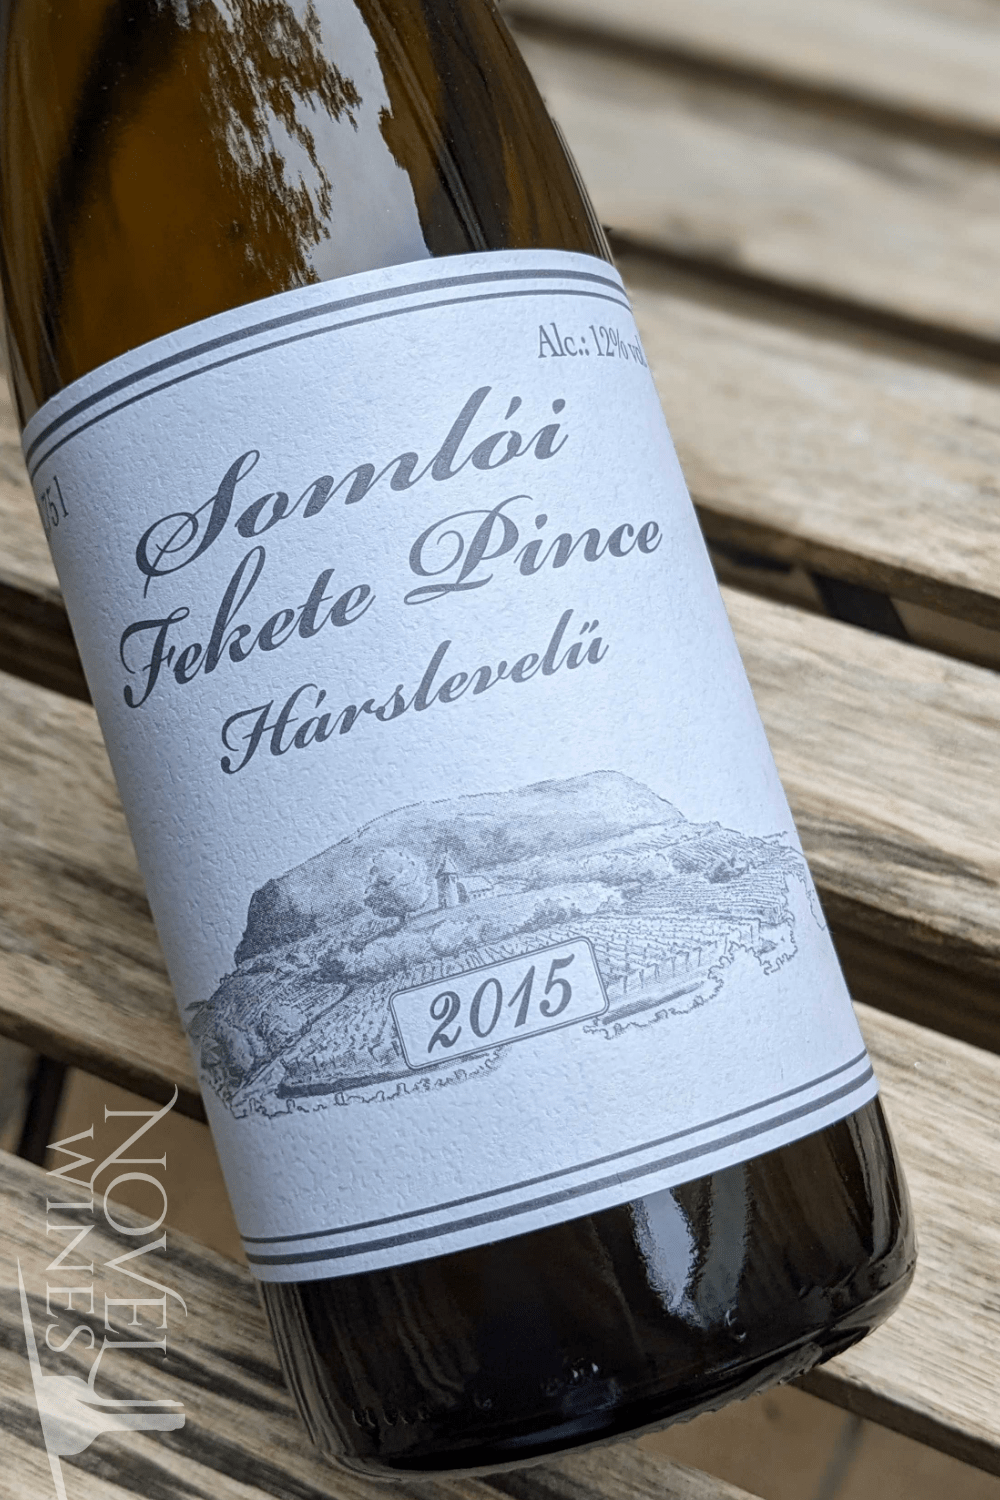 Novel Wines Fekete Pince Harslevelu 2015, Hungary